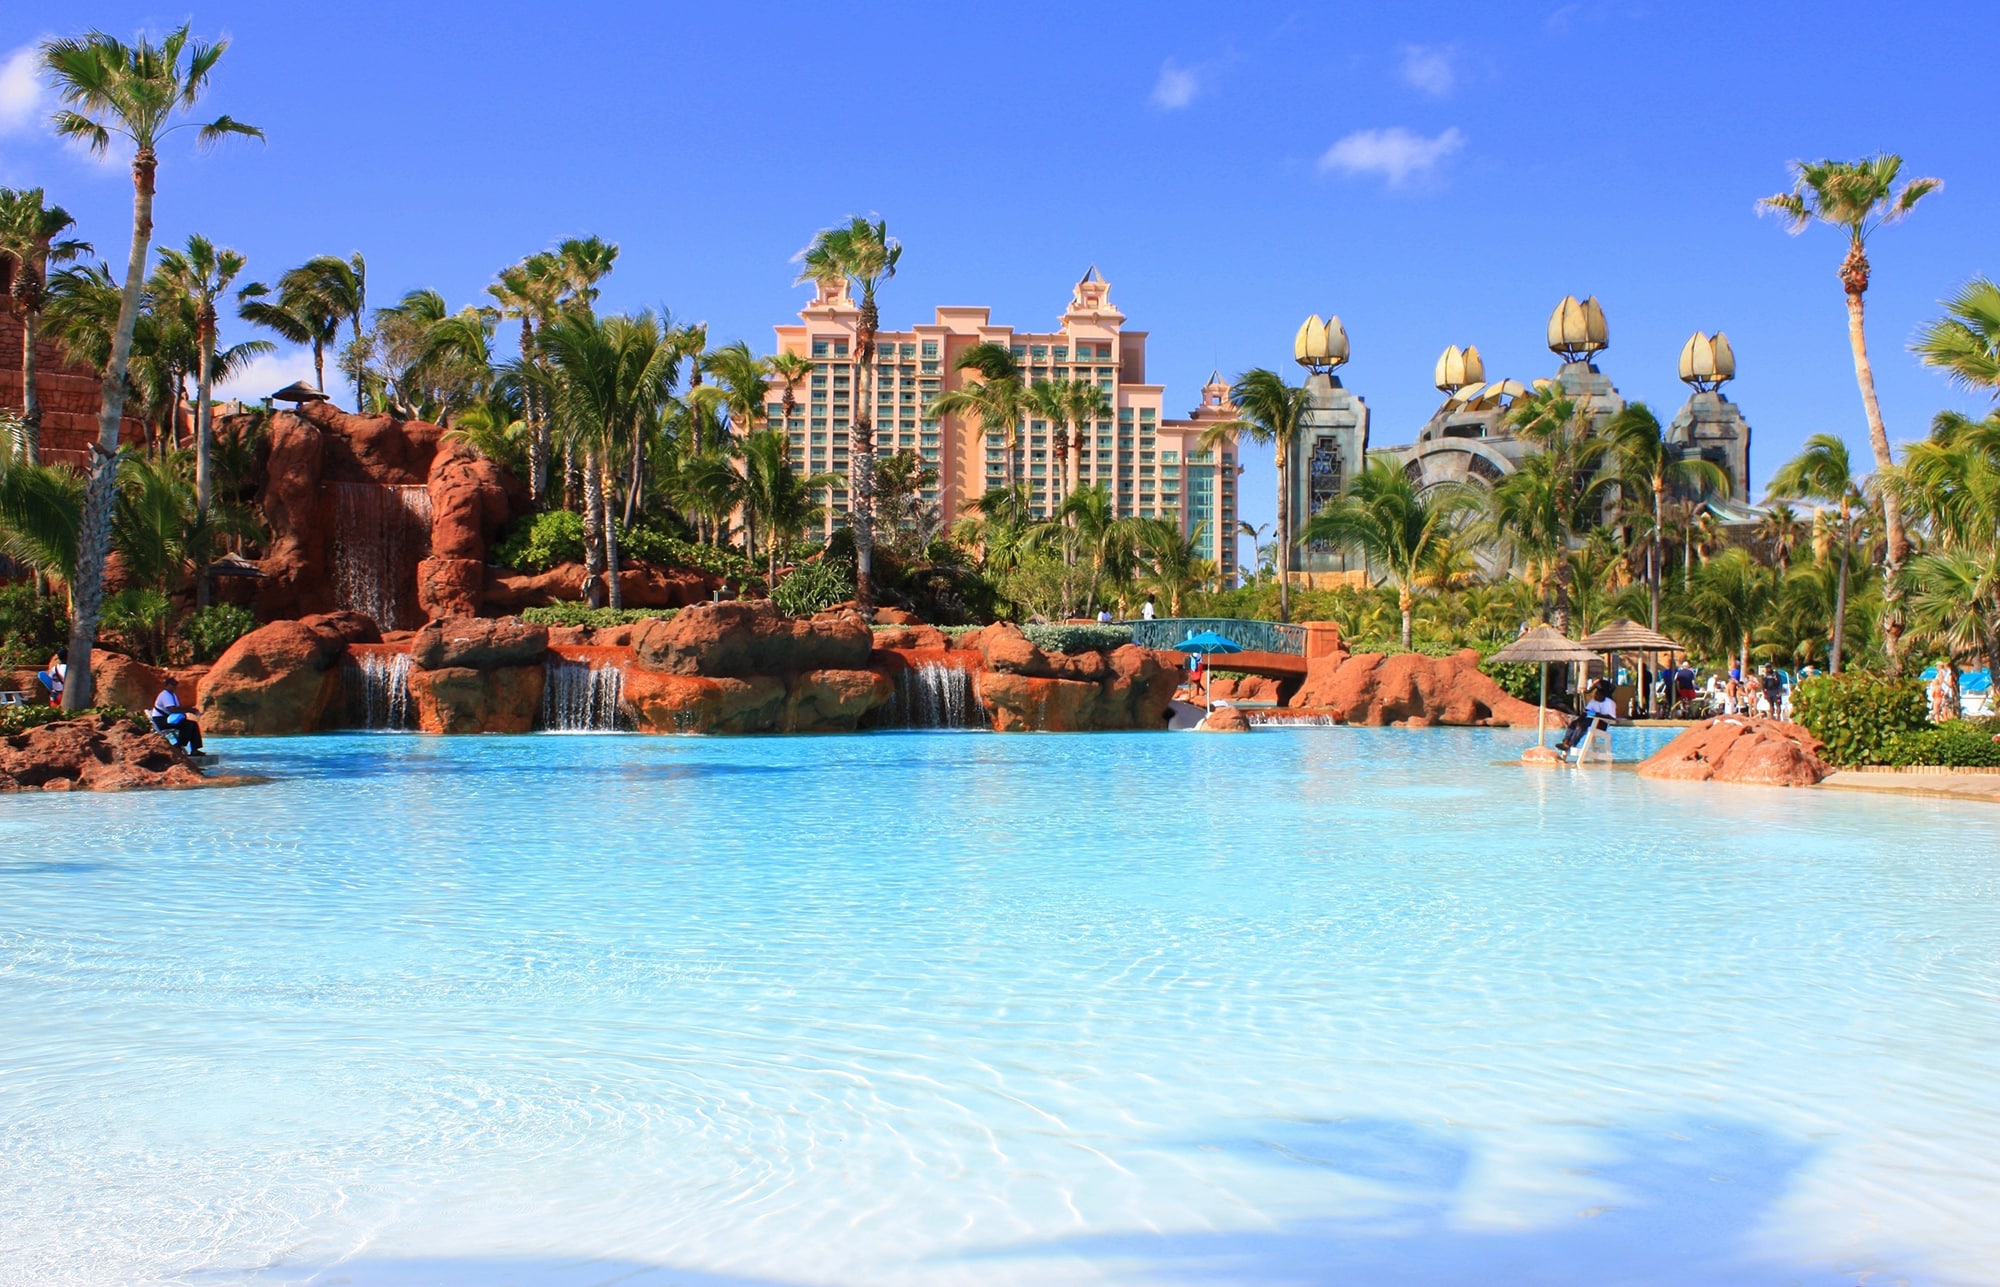 Things to do in the Bahamas: visit Atlantis resort